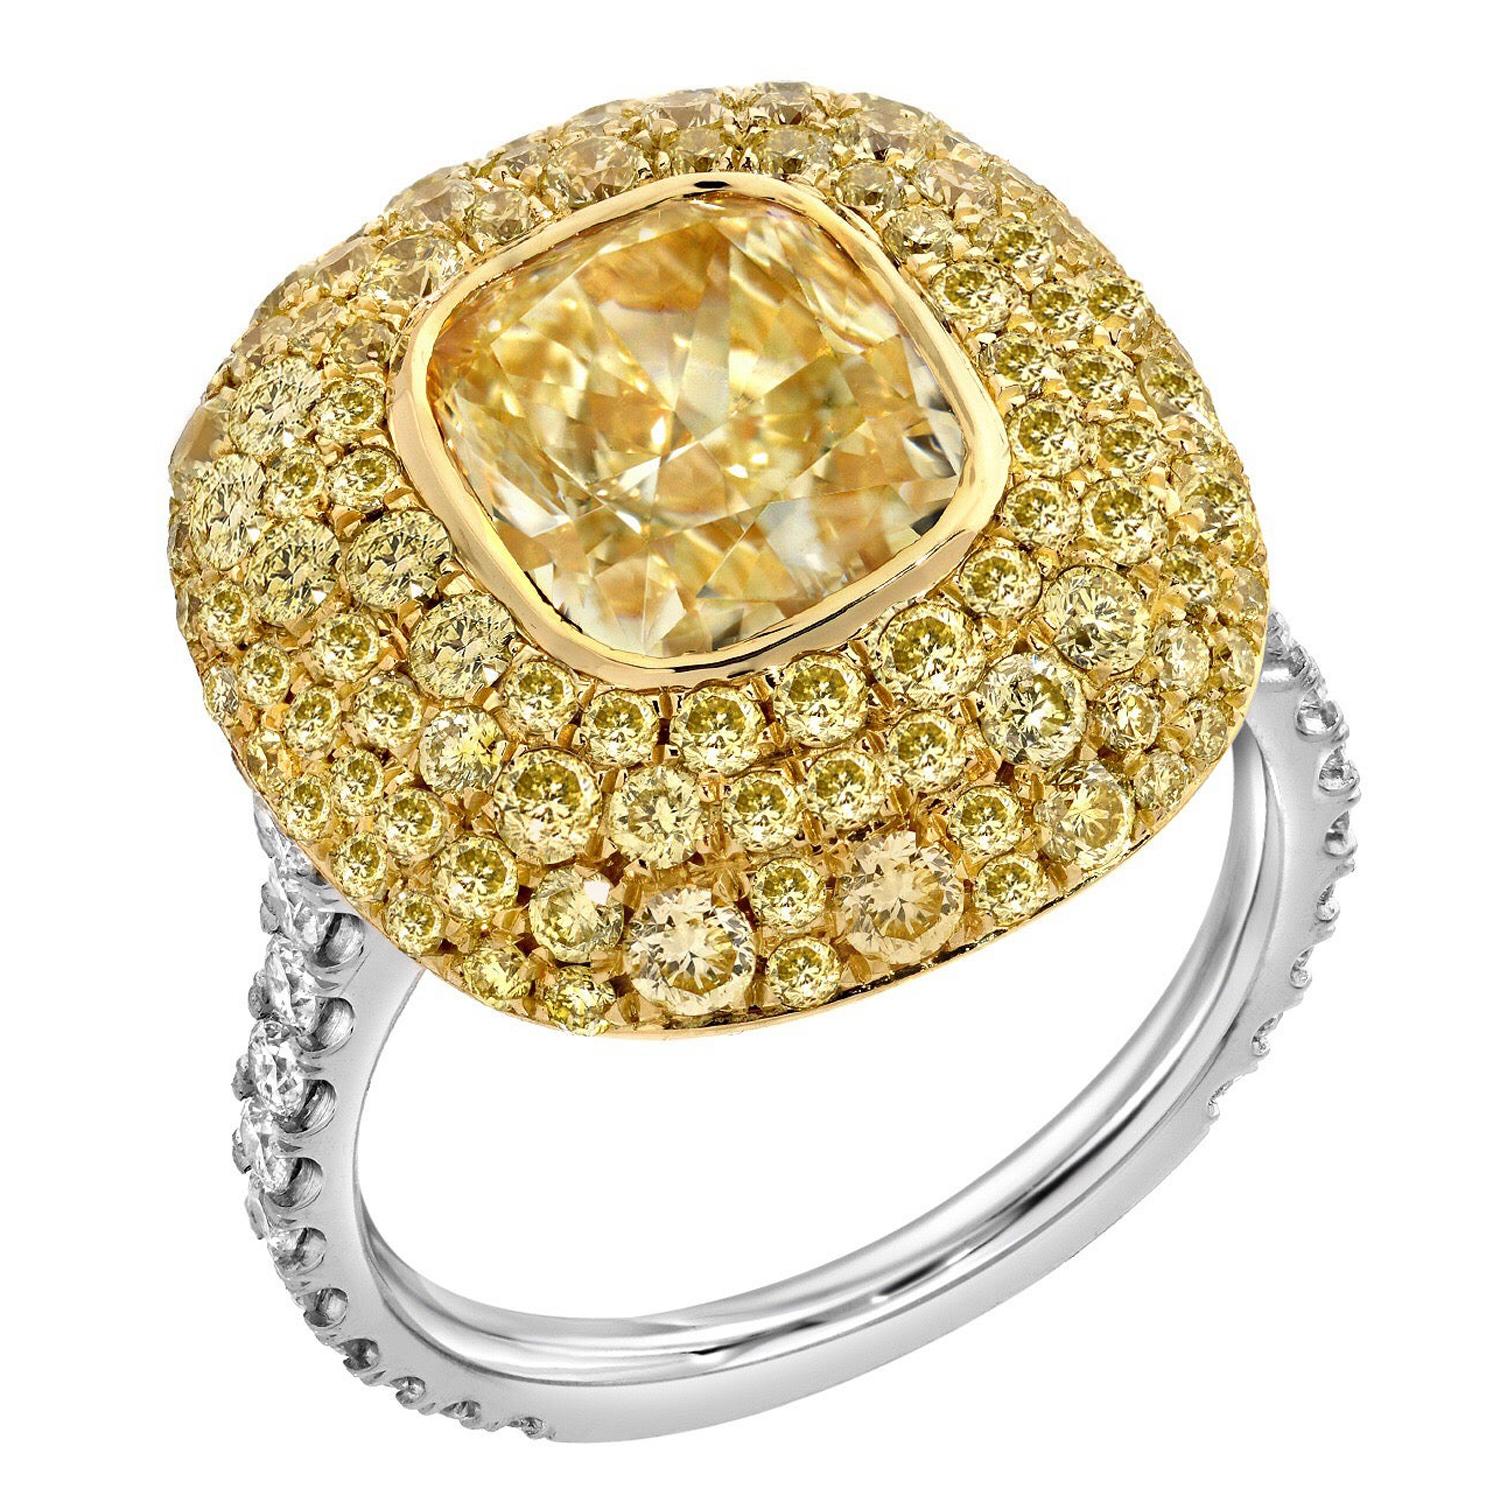 Fancy Light Yellow Diamond Ring 3.01 Carat GIA Certified